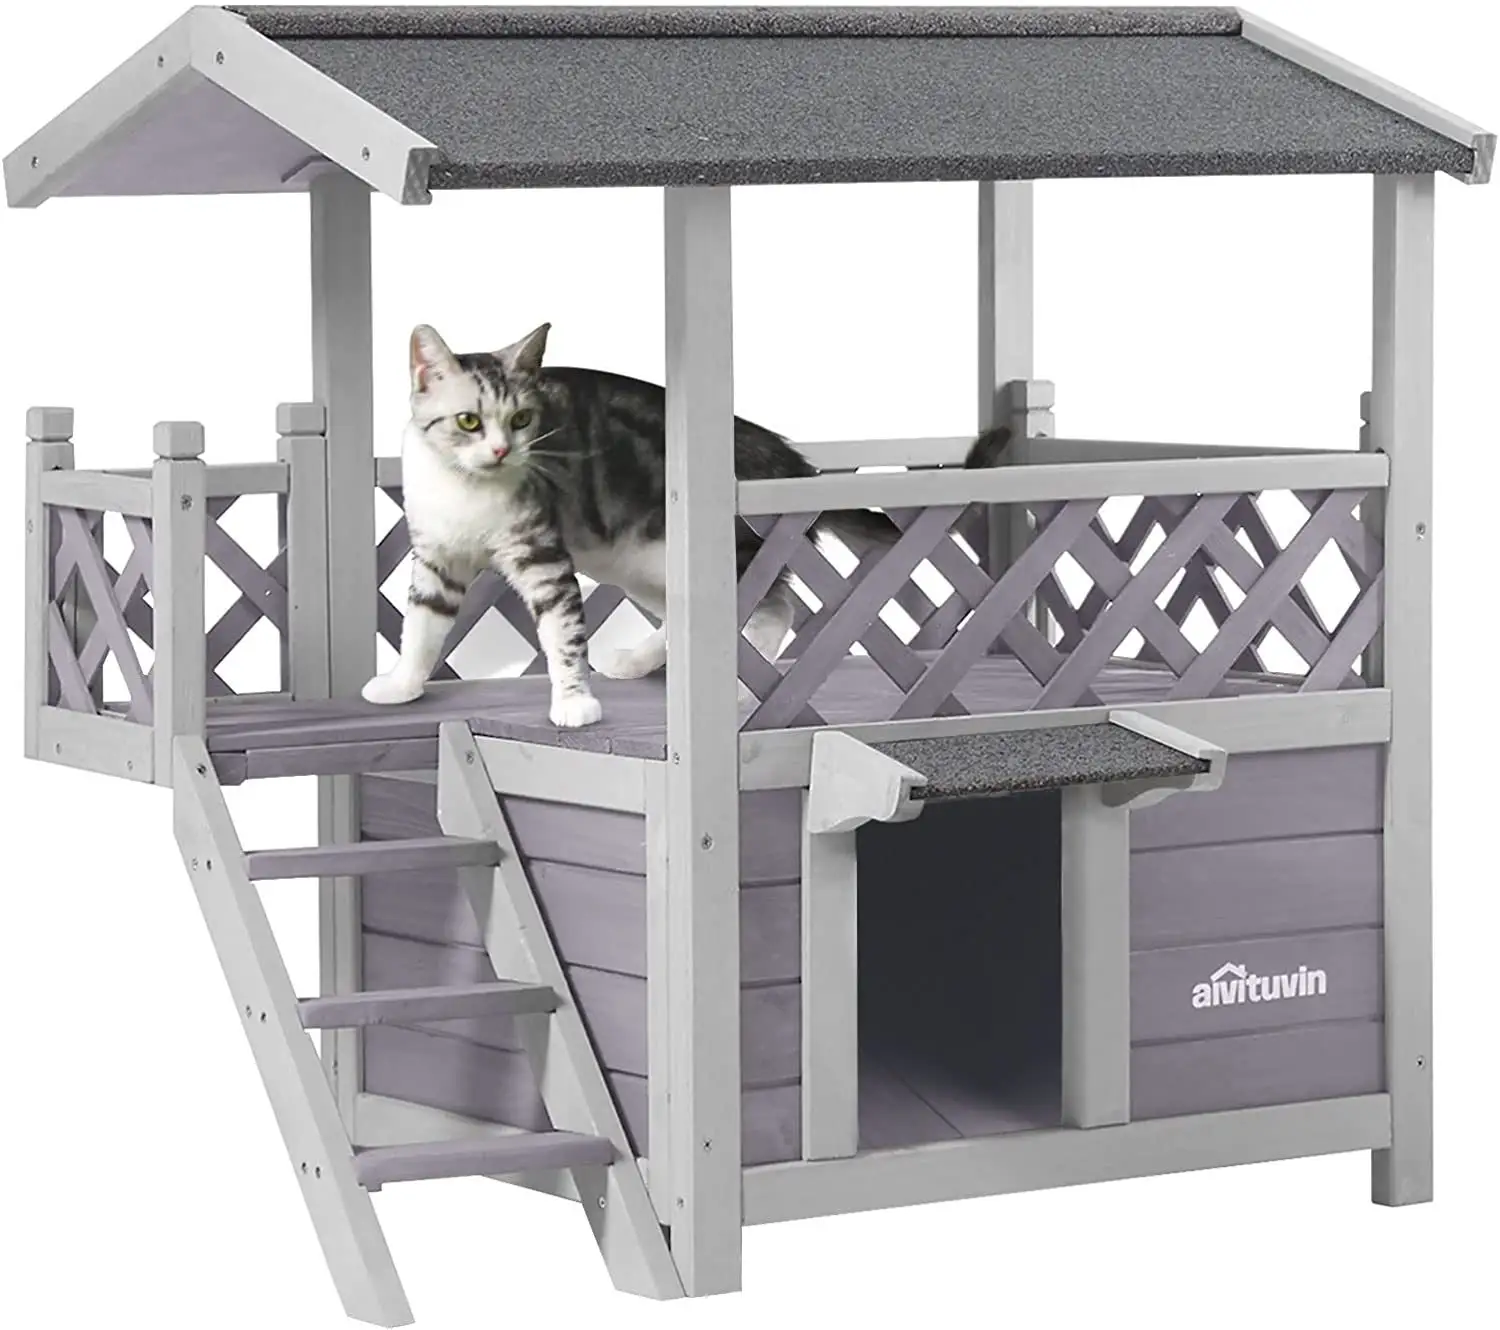 Casa de madera para perros y gatos, casa para mascotas salvajes para interiores y exteriores con escaleras, aislante e impermeable